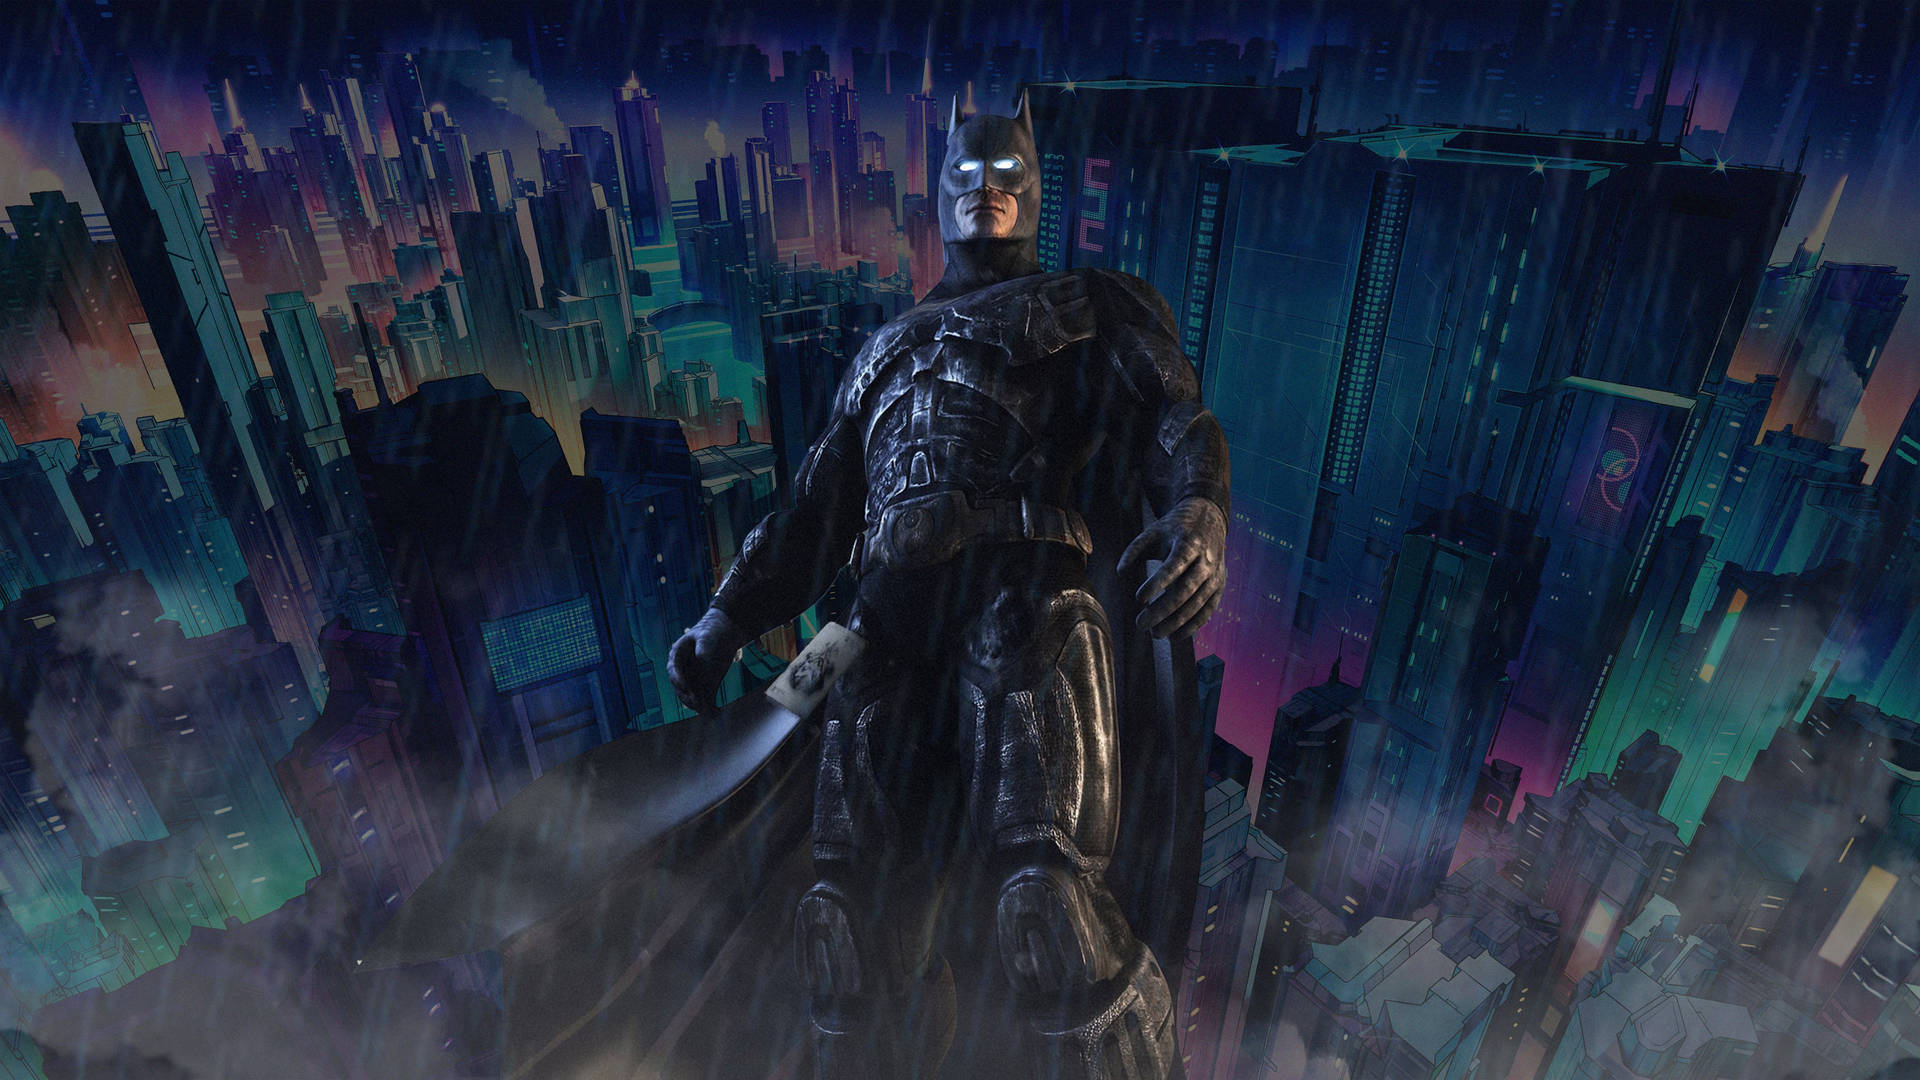 Dark Aesthetic 4k Gotham With Batman Wallpaper